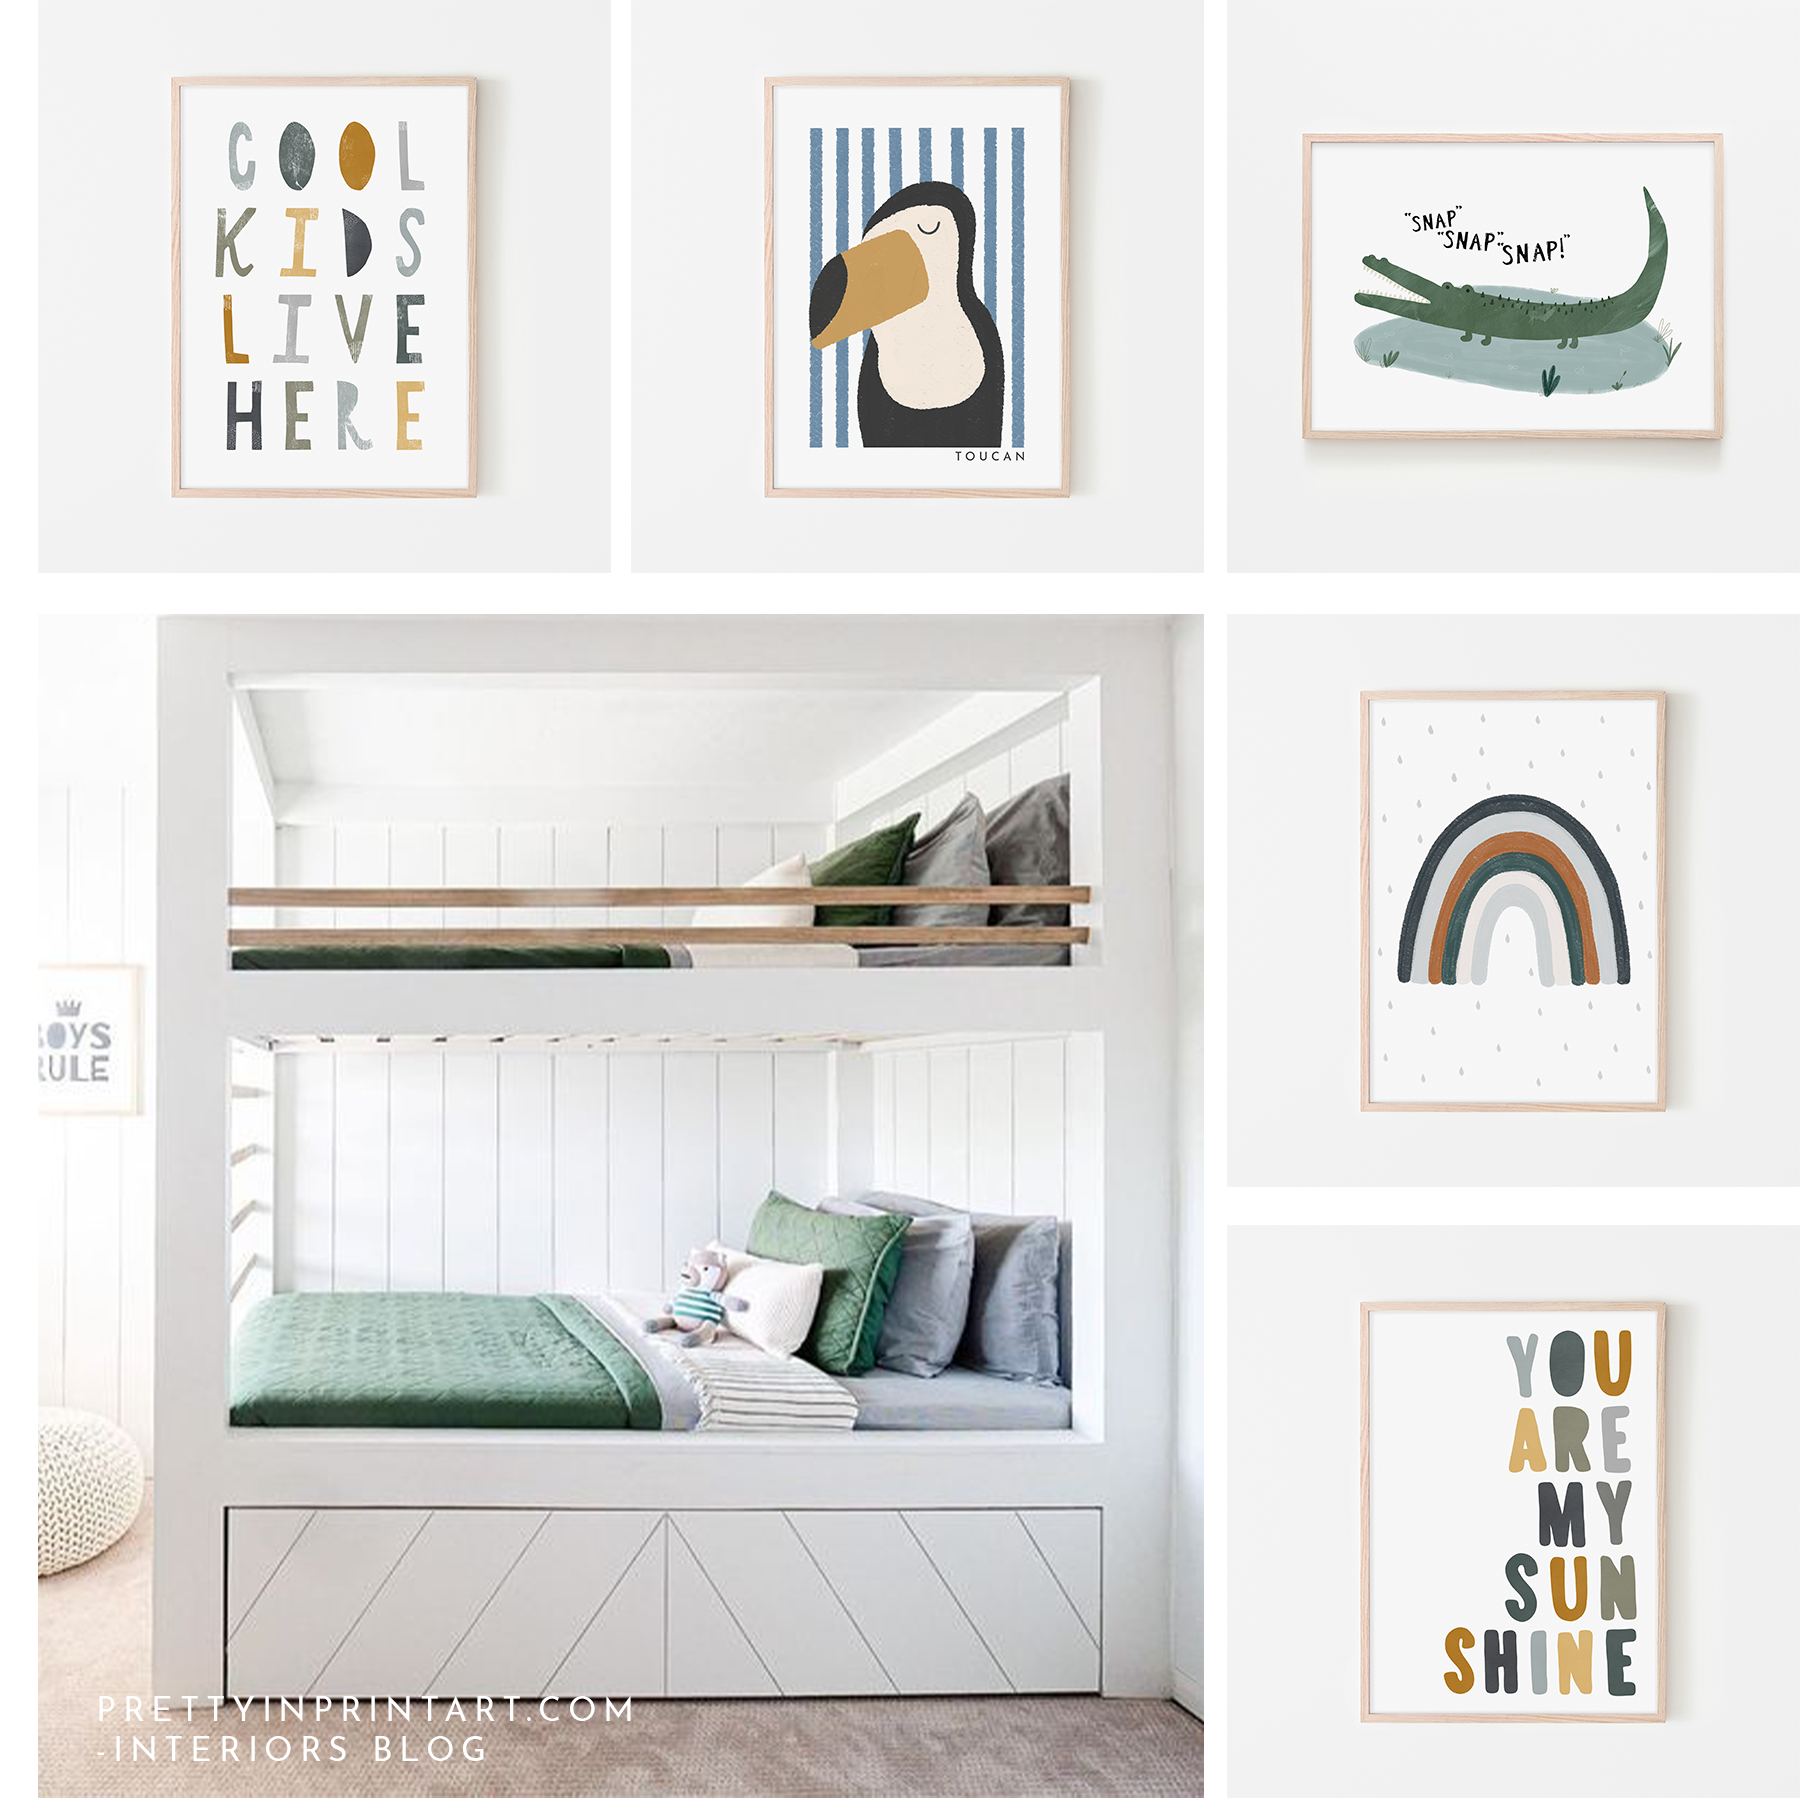 diy-bunk-bed-ideas-jungle-animal-safari-wall-art-prints-kids-boys-bedroom-decor.psd